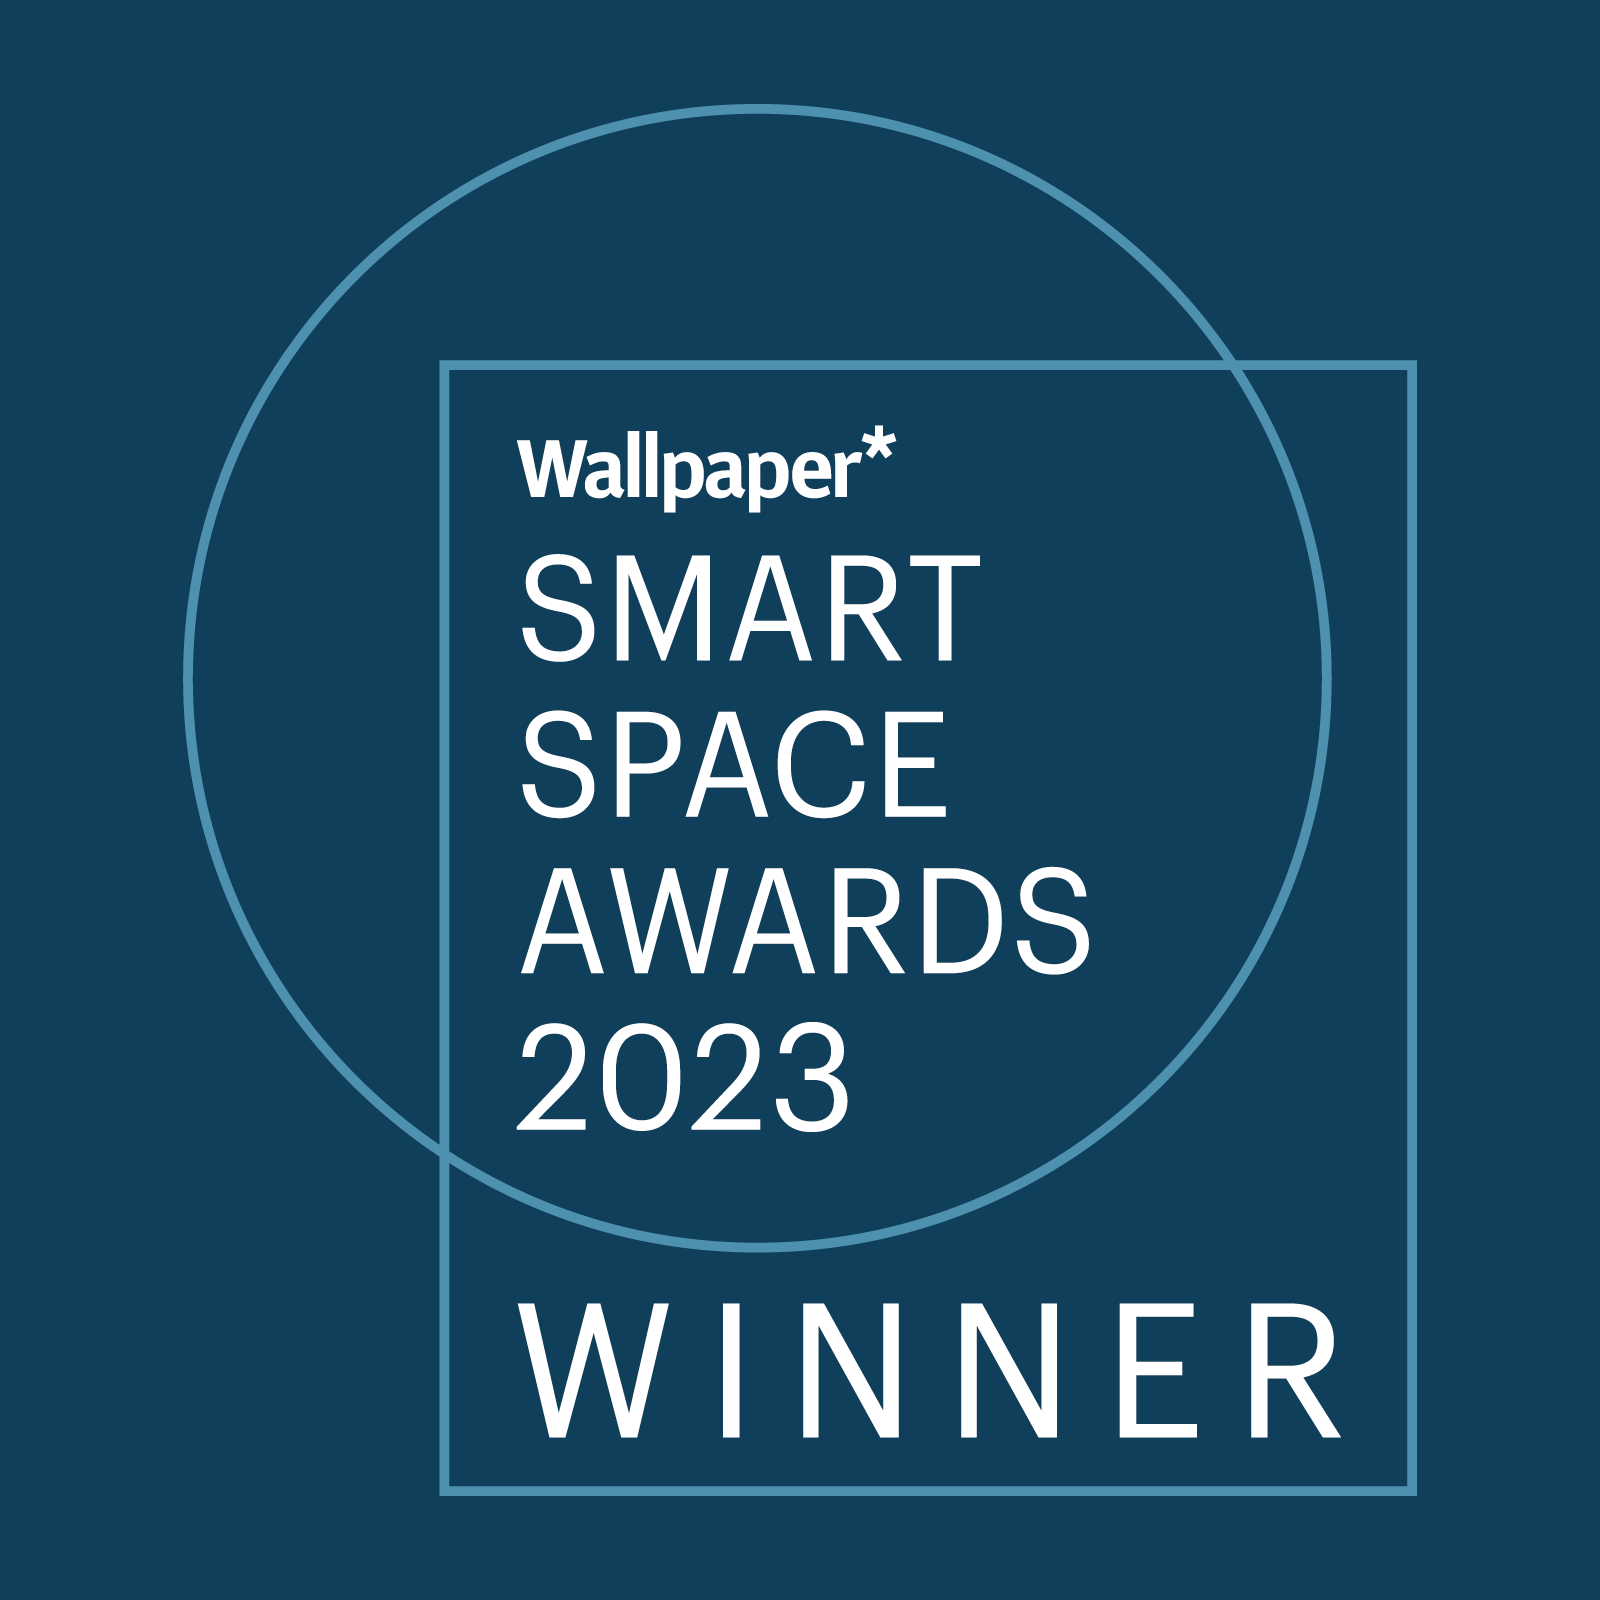 Wallpaper* Smart Space Awards 2023